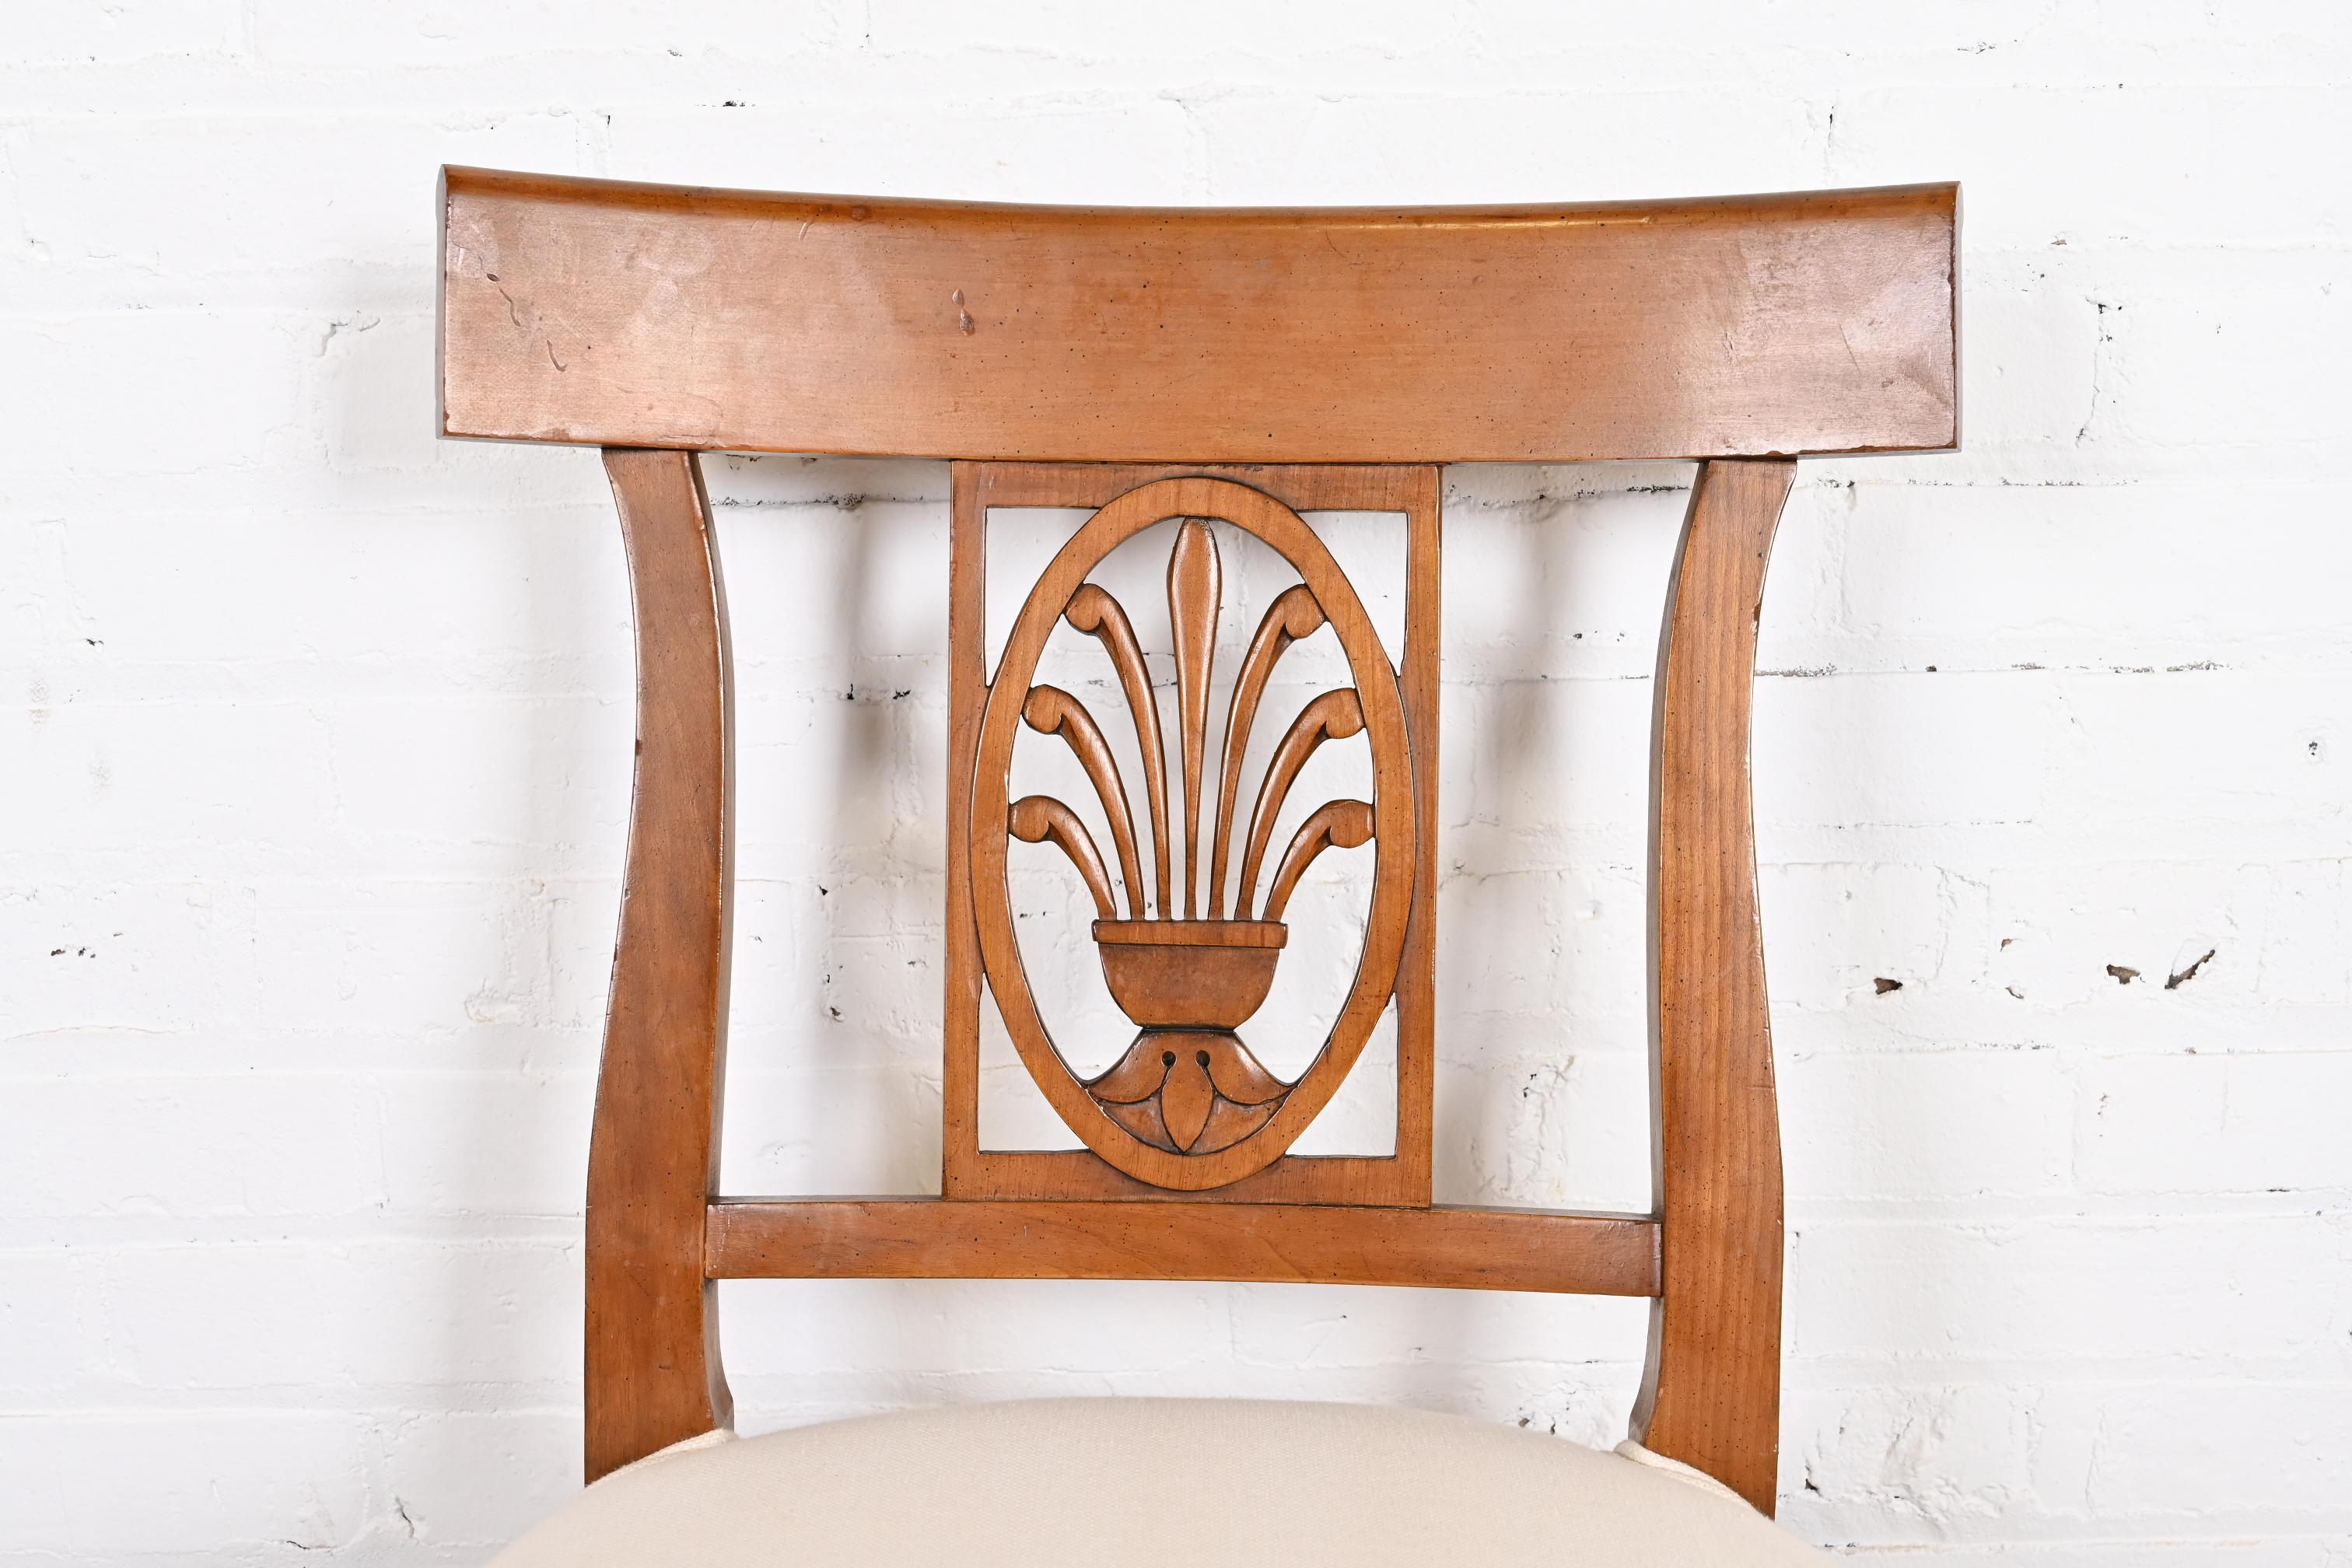 Kindel Furniture Regency Carved Fruitwood Dining Chairs, Set of Four For Sale 1